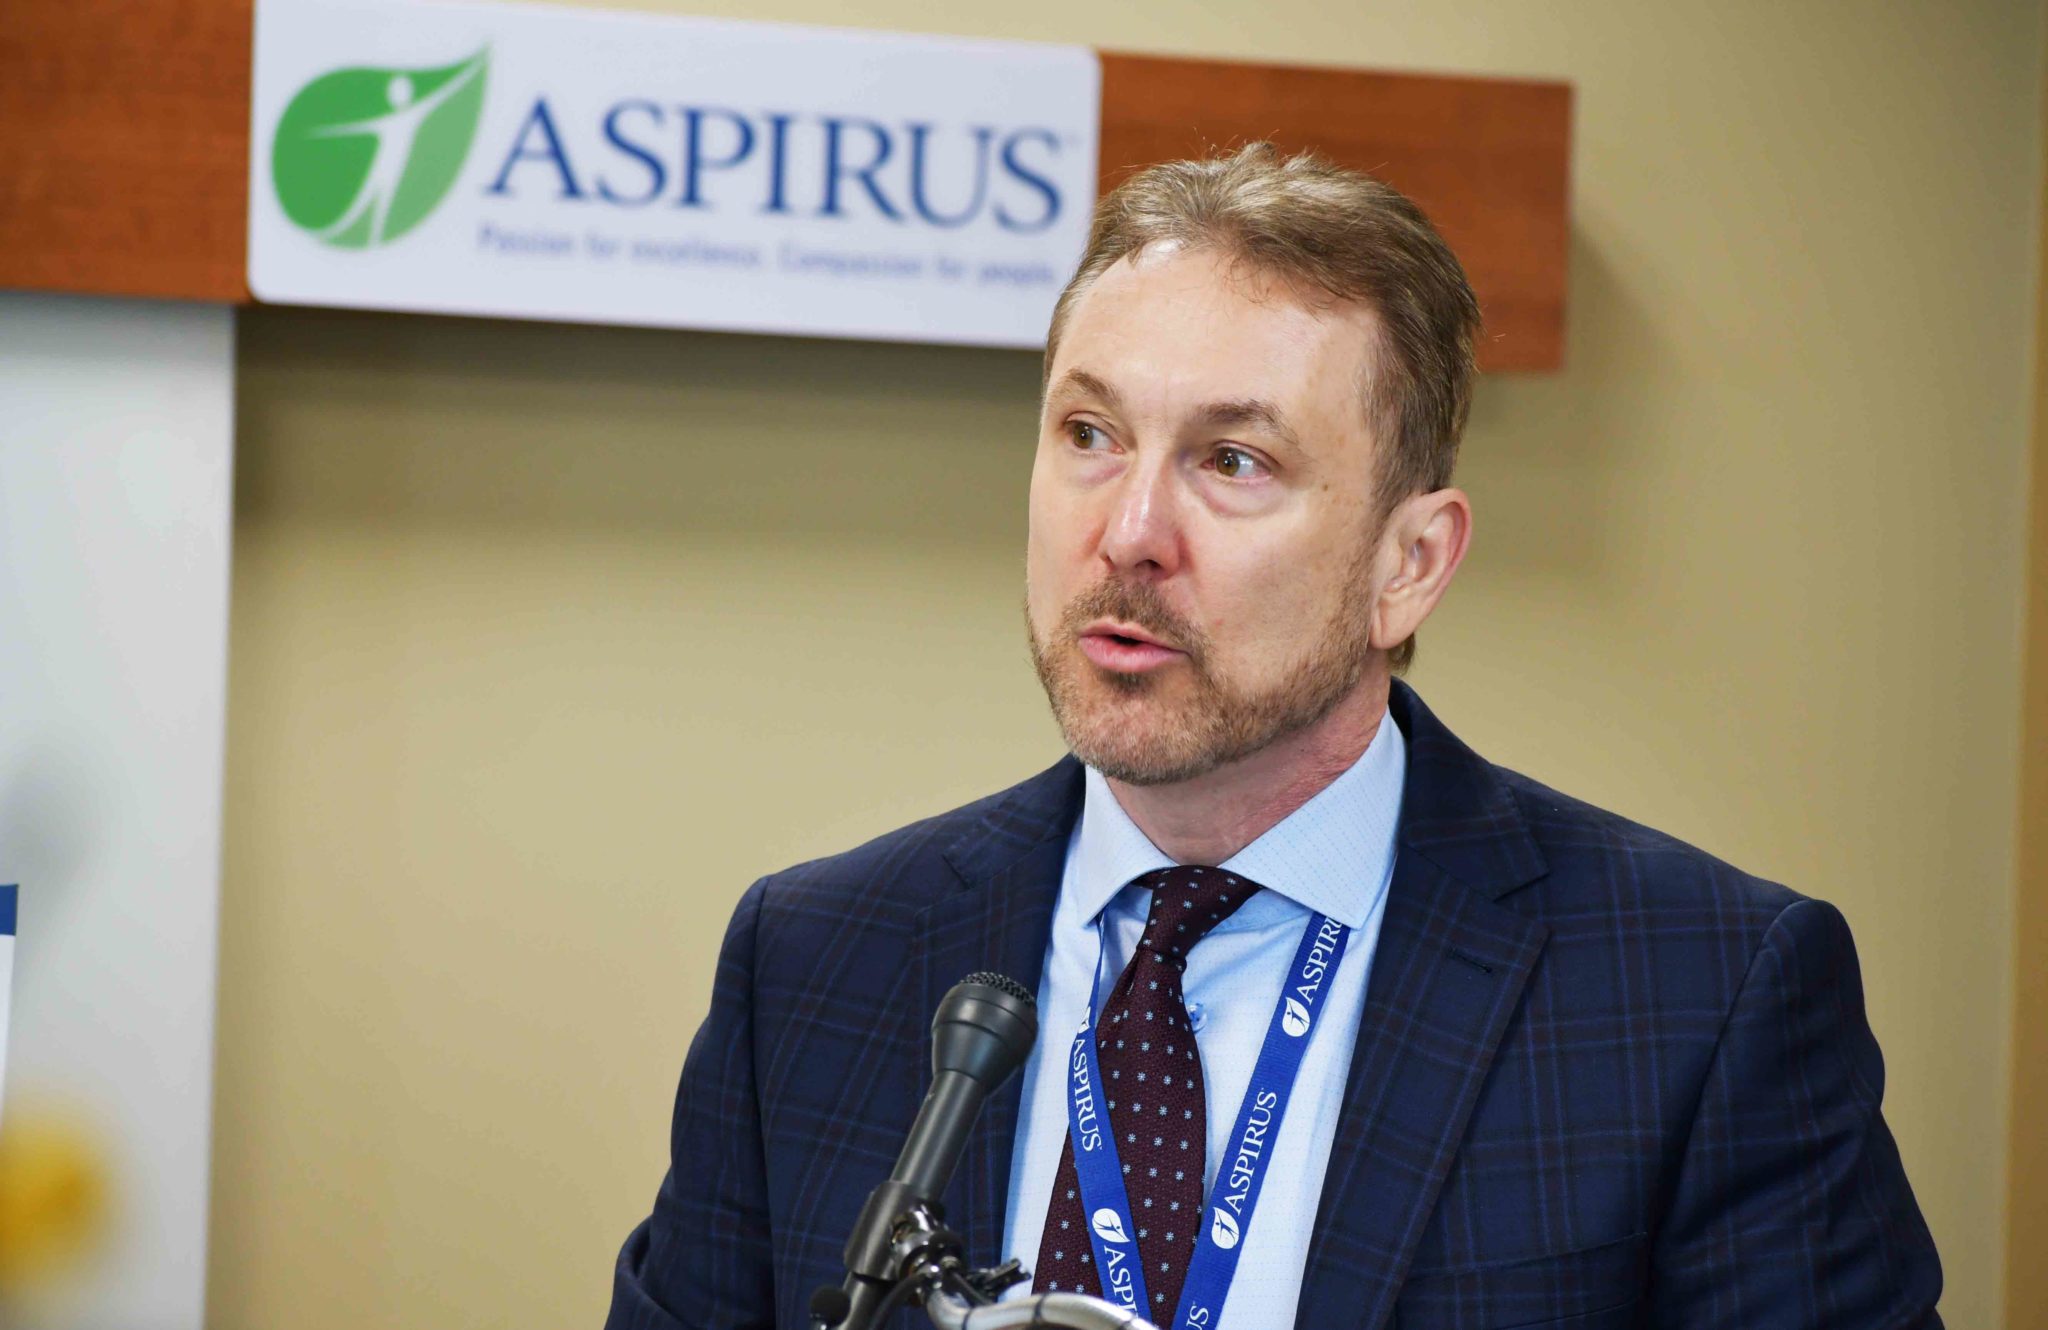 Aspirus’ new northern Wisconsin facilities change names in December 